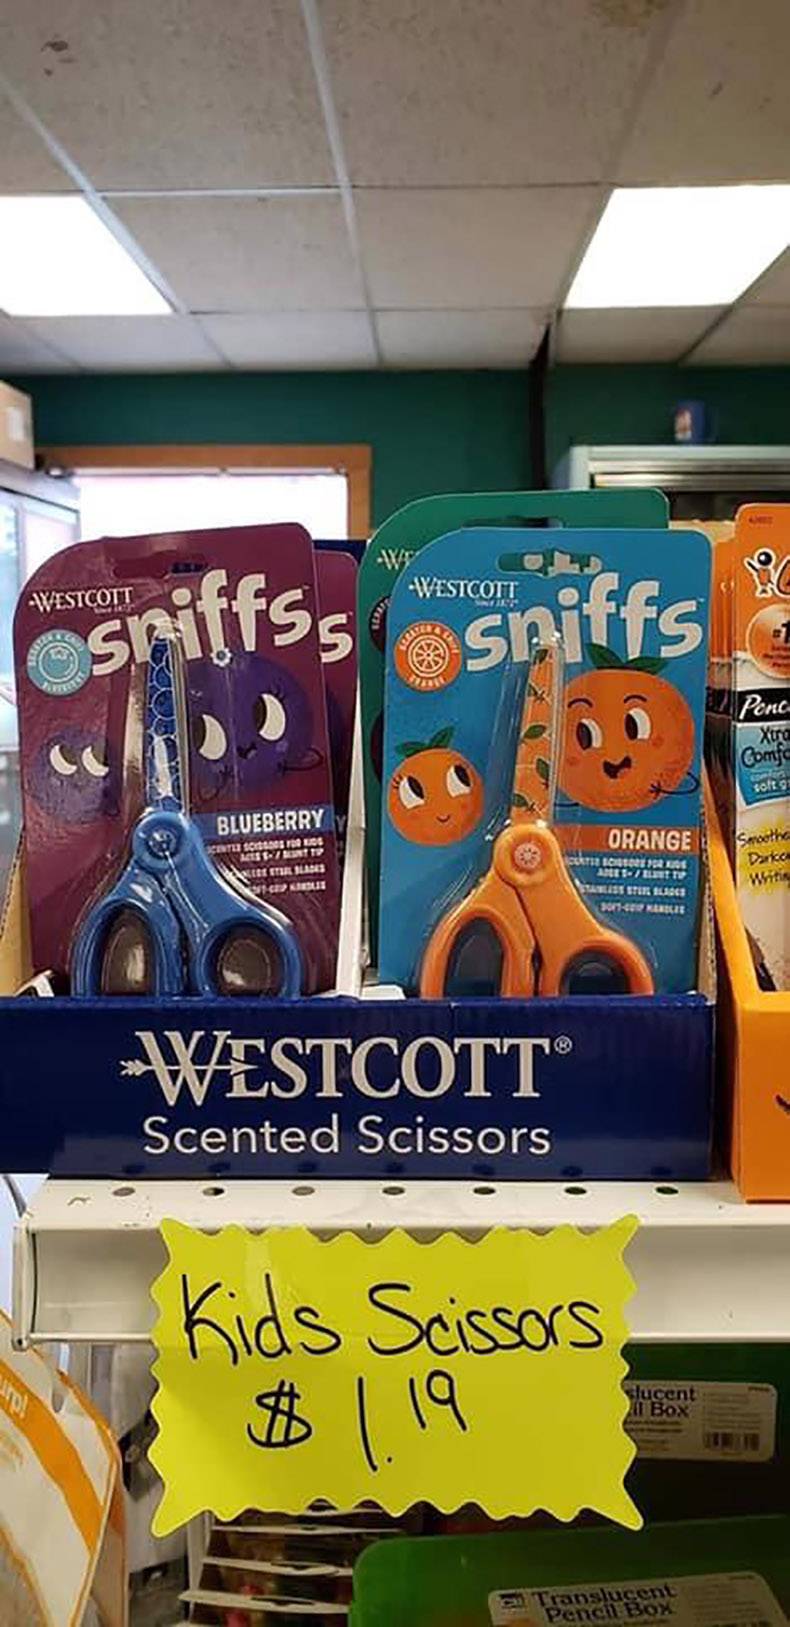 westcott scented scissors - W Westcott Westcott wschiffss wameniffs Penc Xura Comic ita Blueberry Tolog Orange Smooth The Cusorer Og Antiteit Biss Iter 2003 Westcott Scented Scissors Kids Scissors